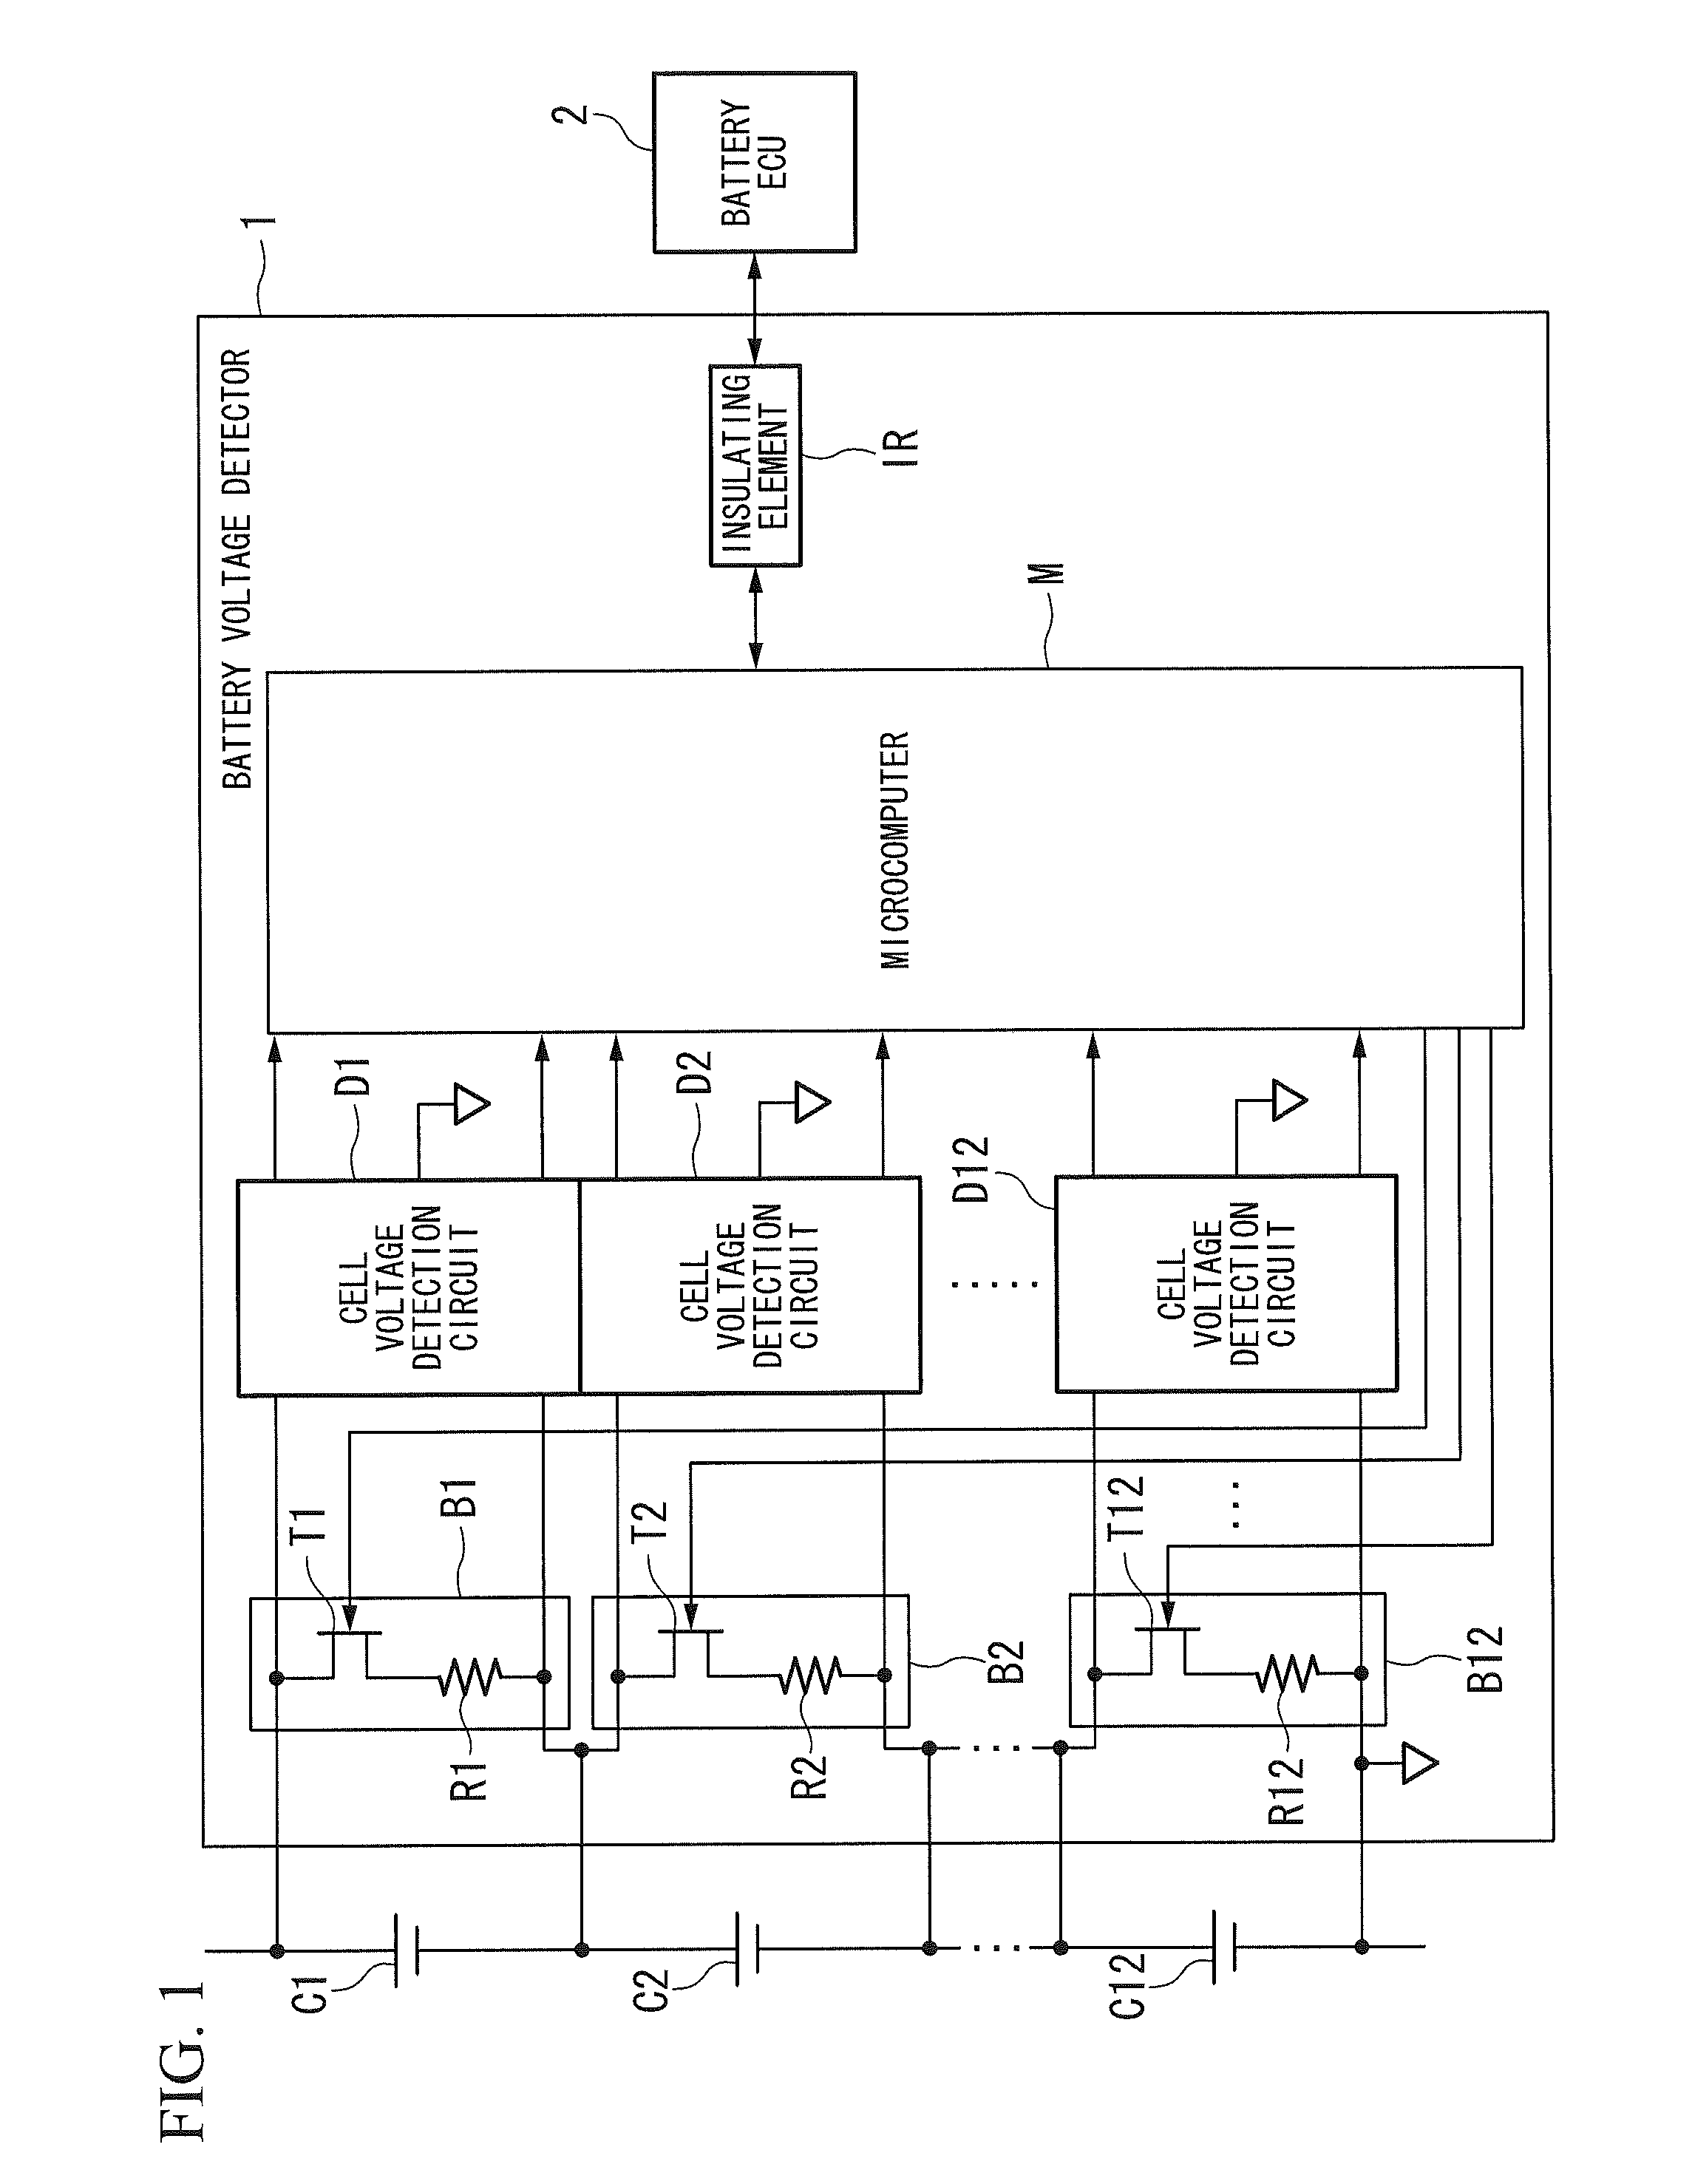 Battery voltage detector having pull-up resistor